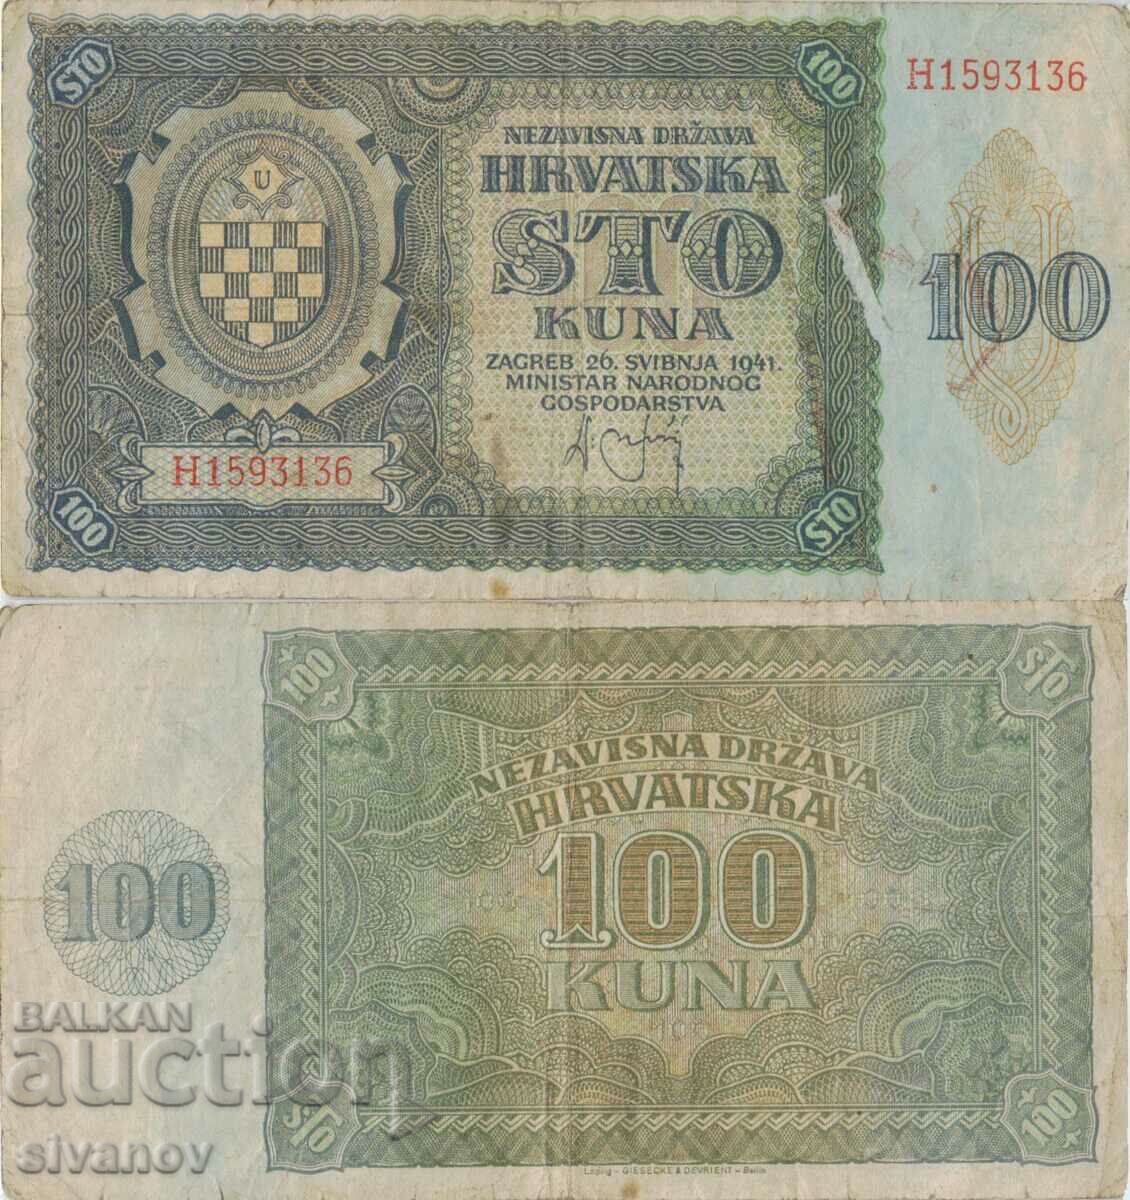 Croația 100 kuna 1941 bancnota #5320